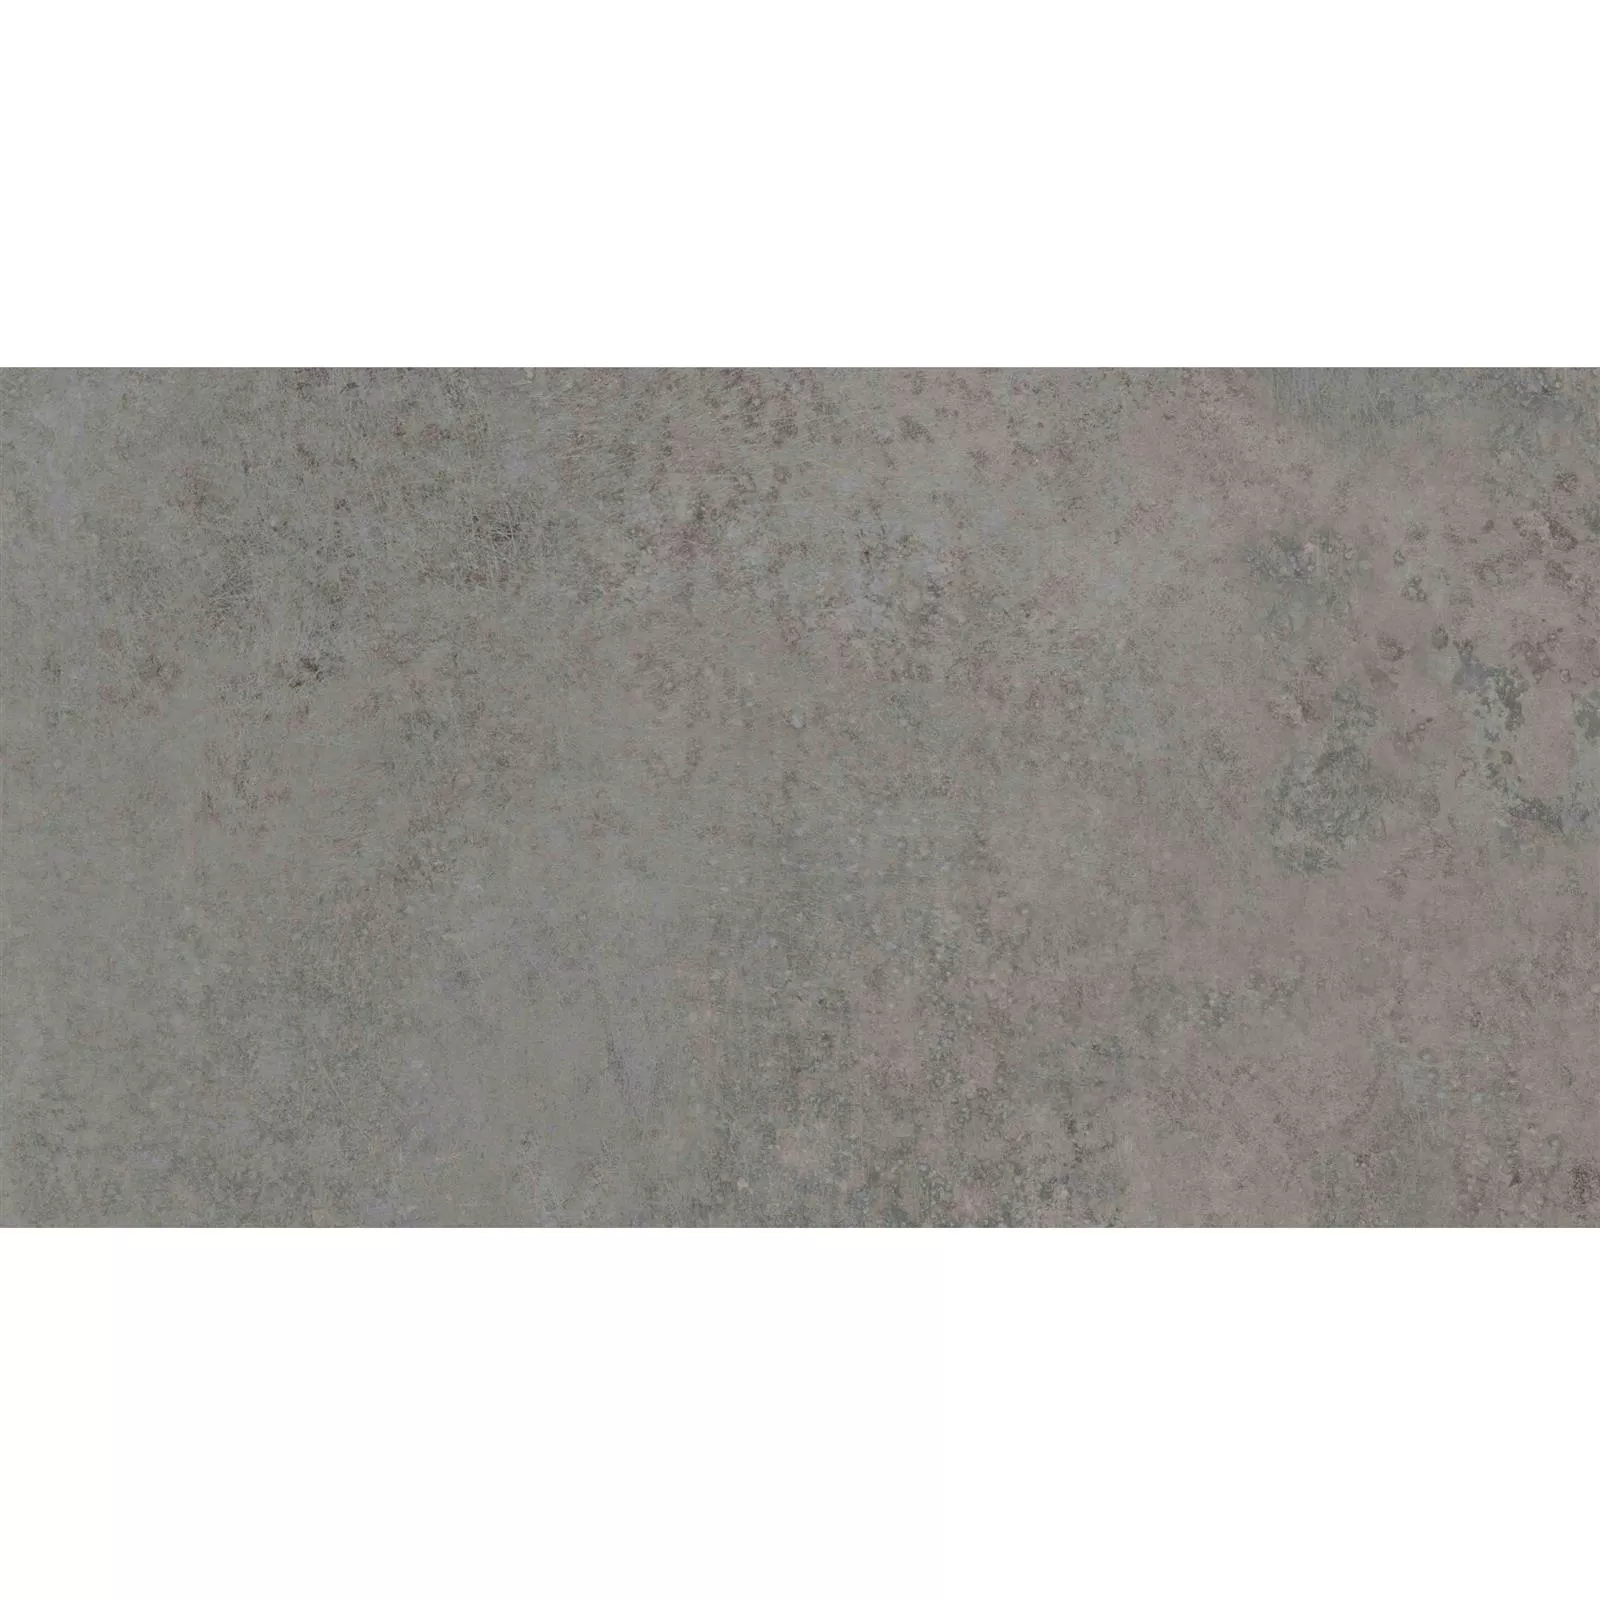 Sample Floor Tiles Peaceway Taupe 30x60cm